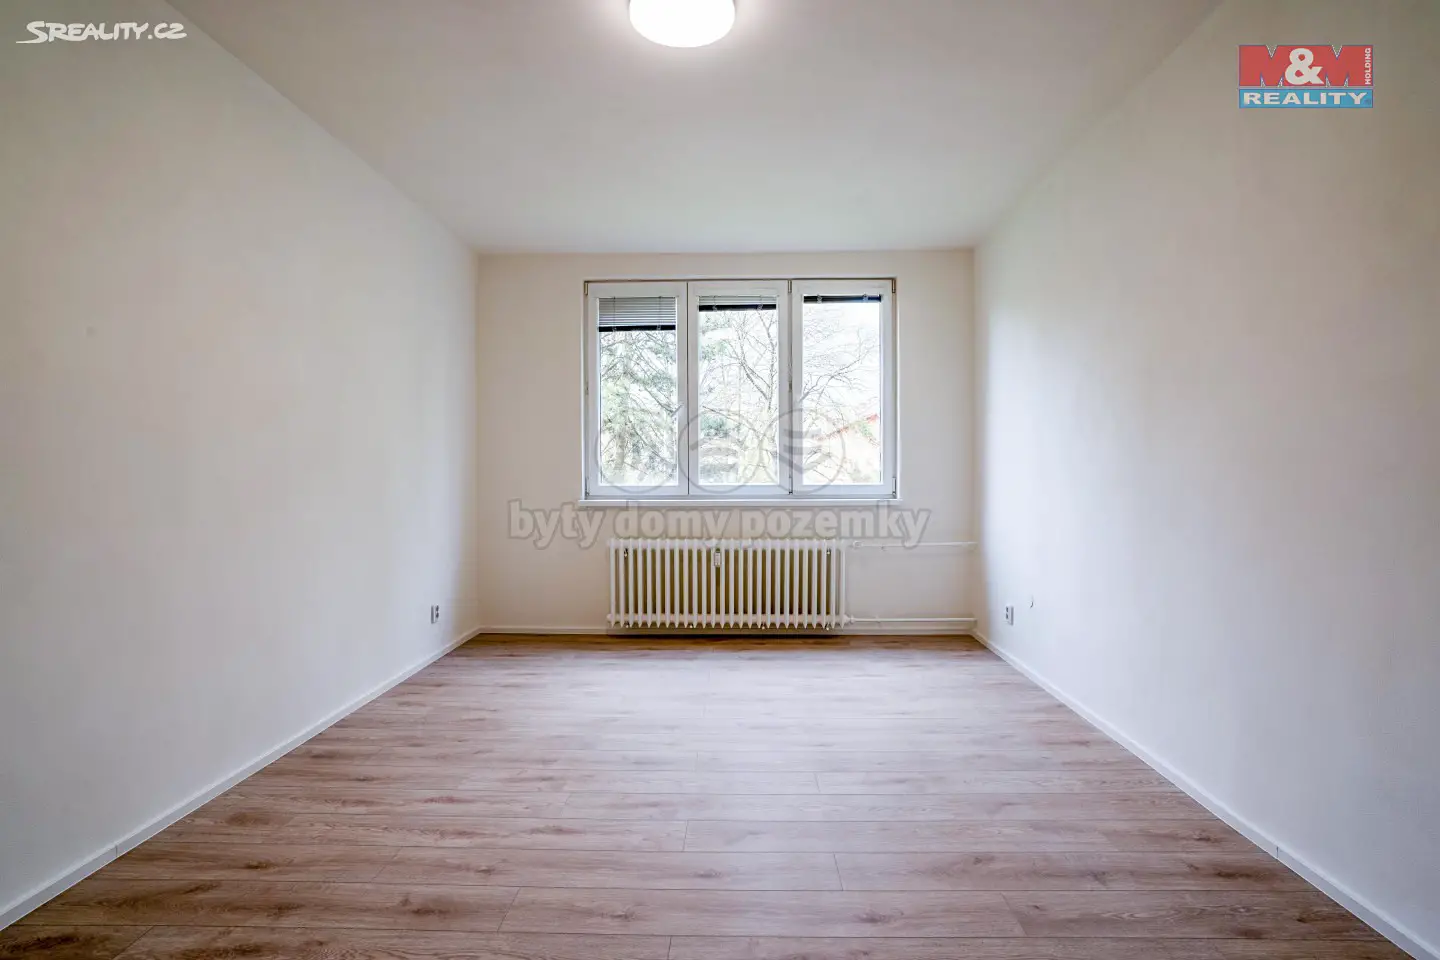 Prodej bytu 3+1 72 m², Dvouletky, Ostrava - Hrabůvka